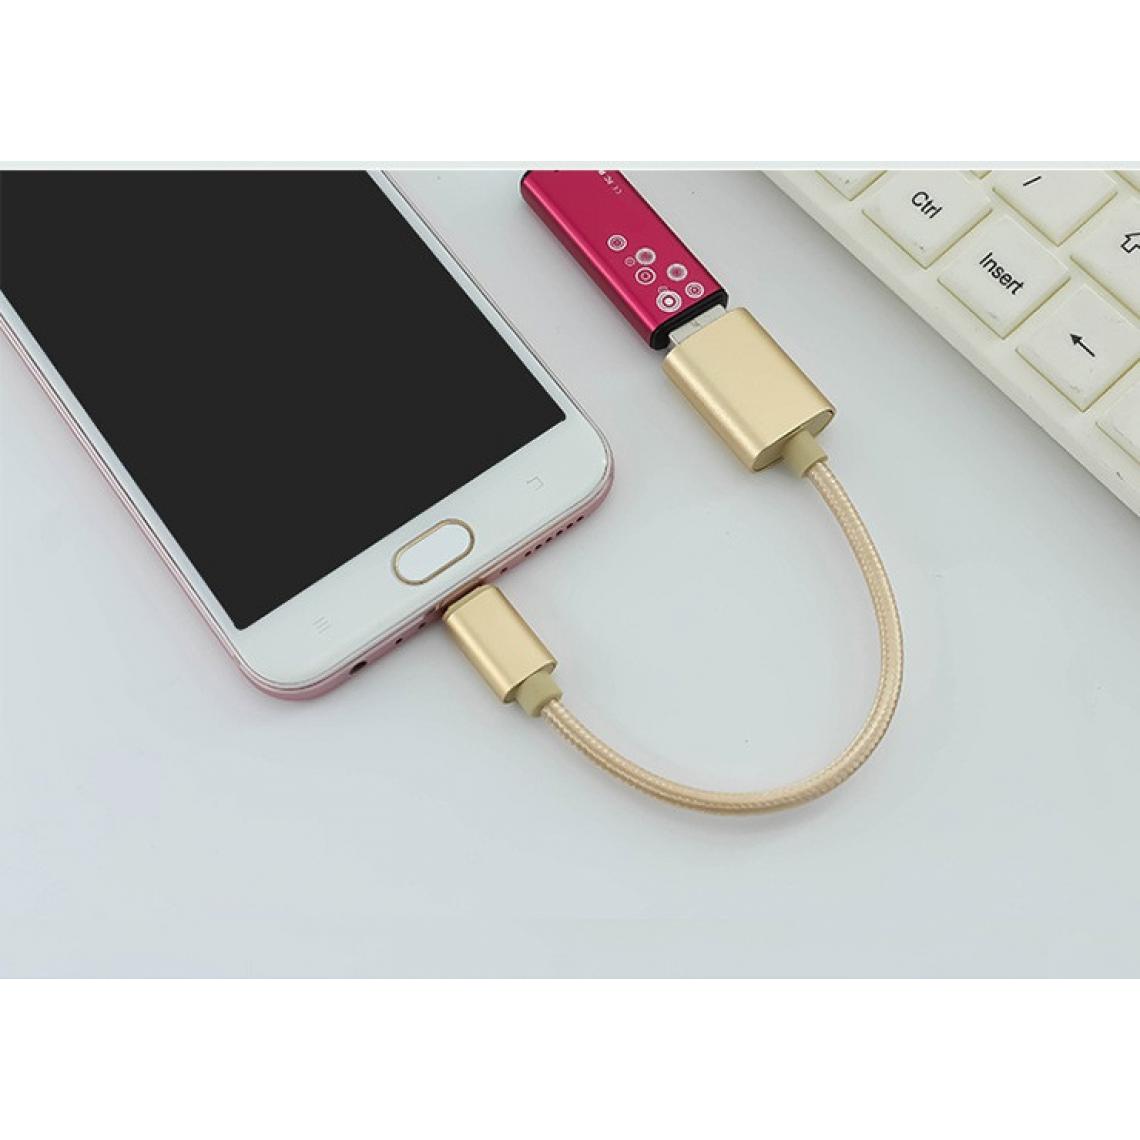 Shot - Adaptateur Type C/USB pour SAMSUNG Galaxy S20 Smartphone & MAC USB-C Clef (OR) - Autres accessoires smartphone